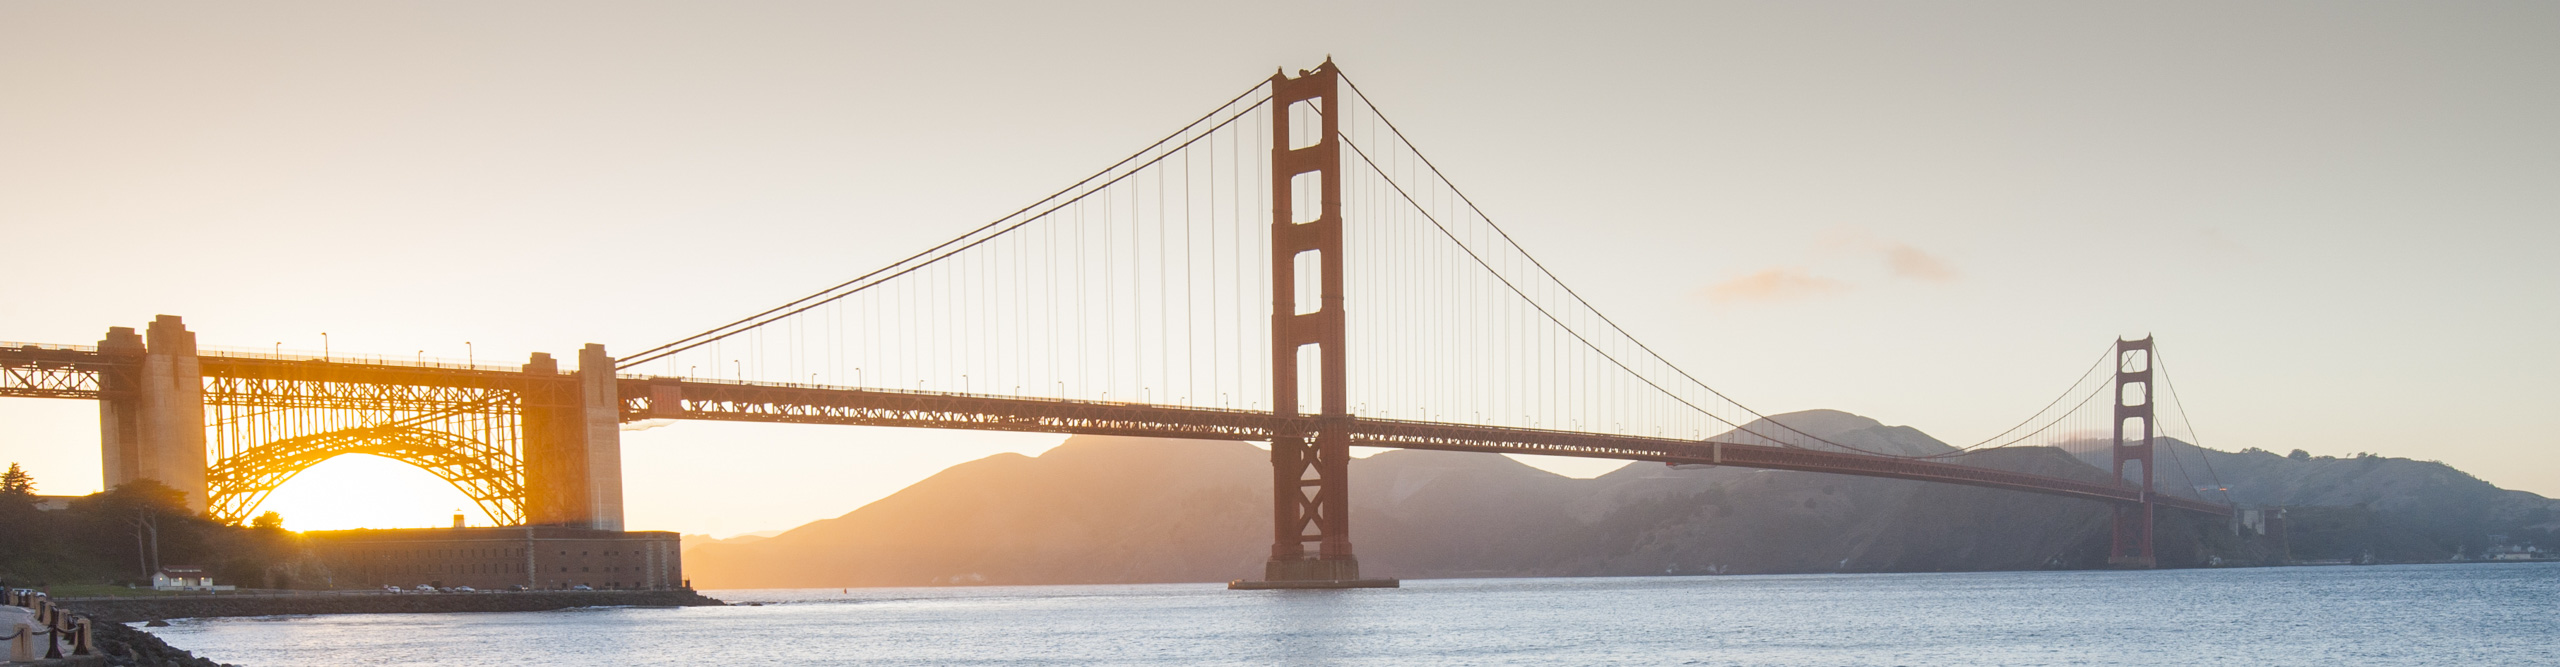 Sunset over the golden gate bridge San Francisco, California, USA